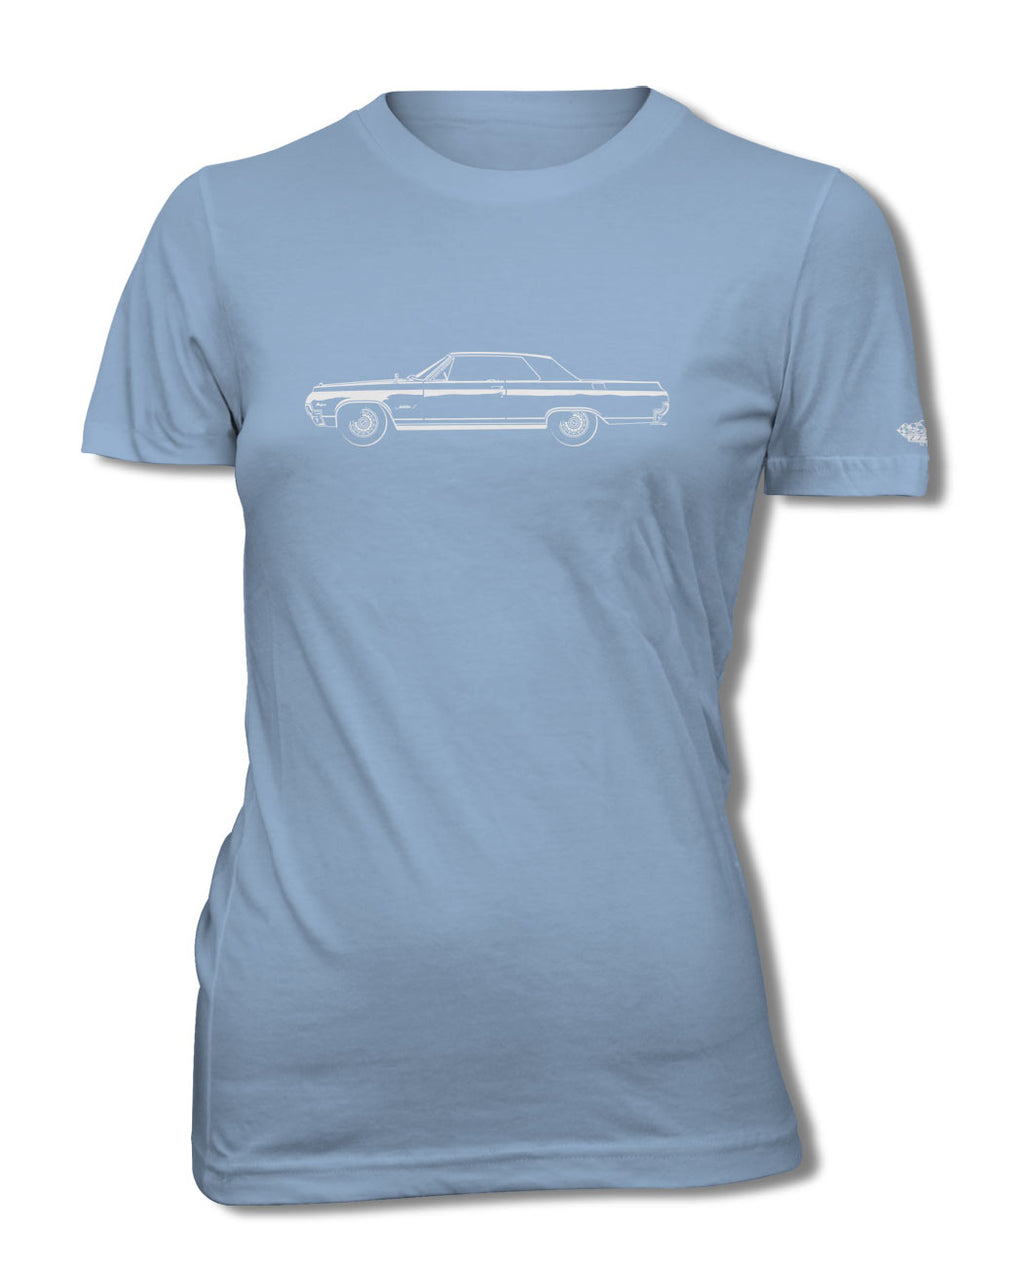 1964 Oldsmobile Jetstar I Coupe T-Shirt - Women - Side View